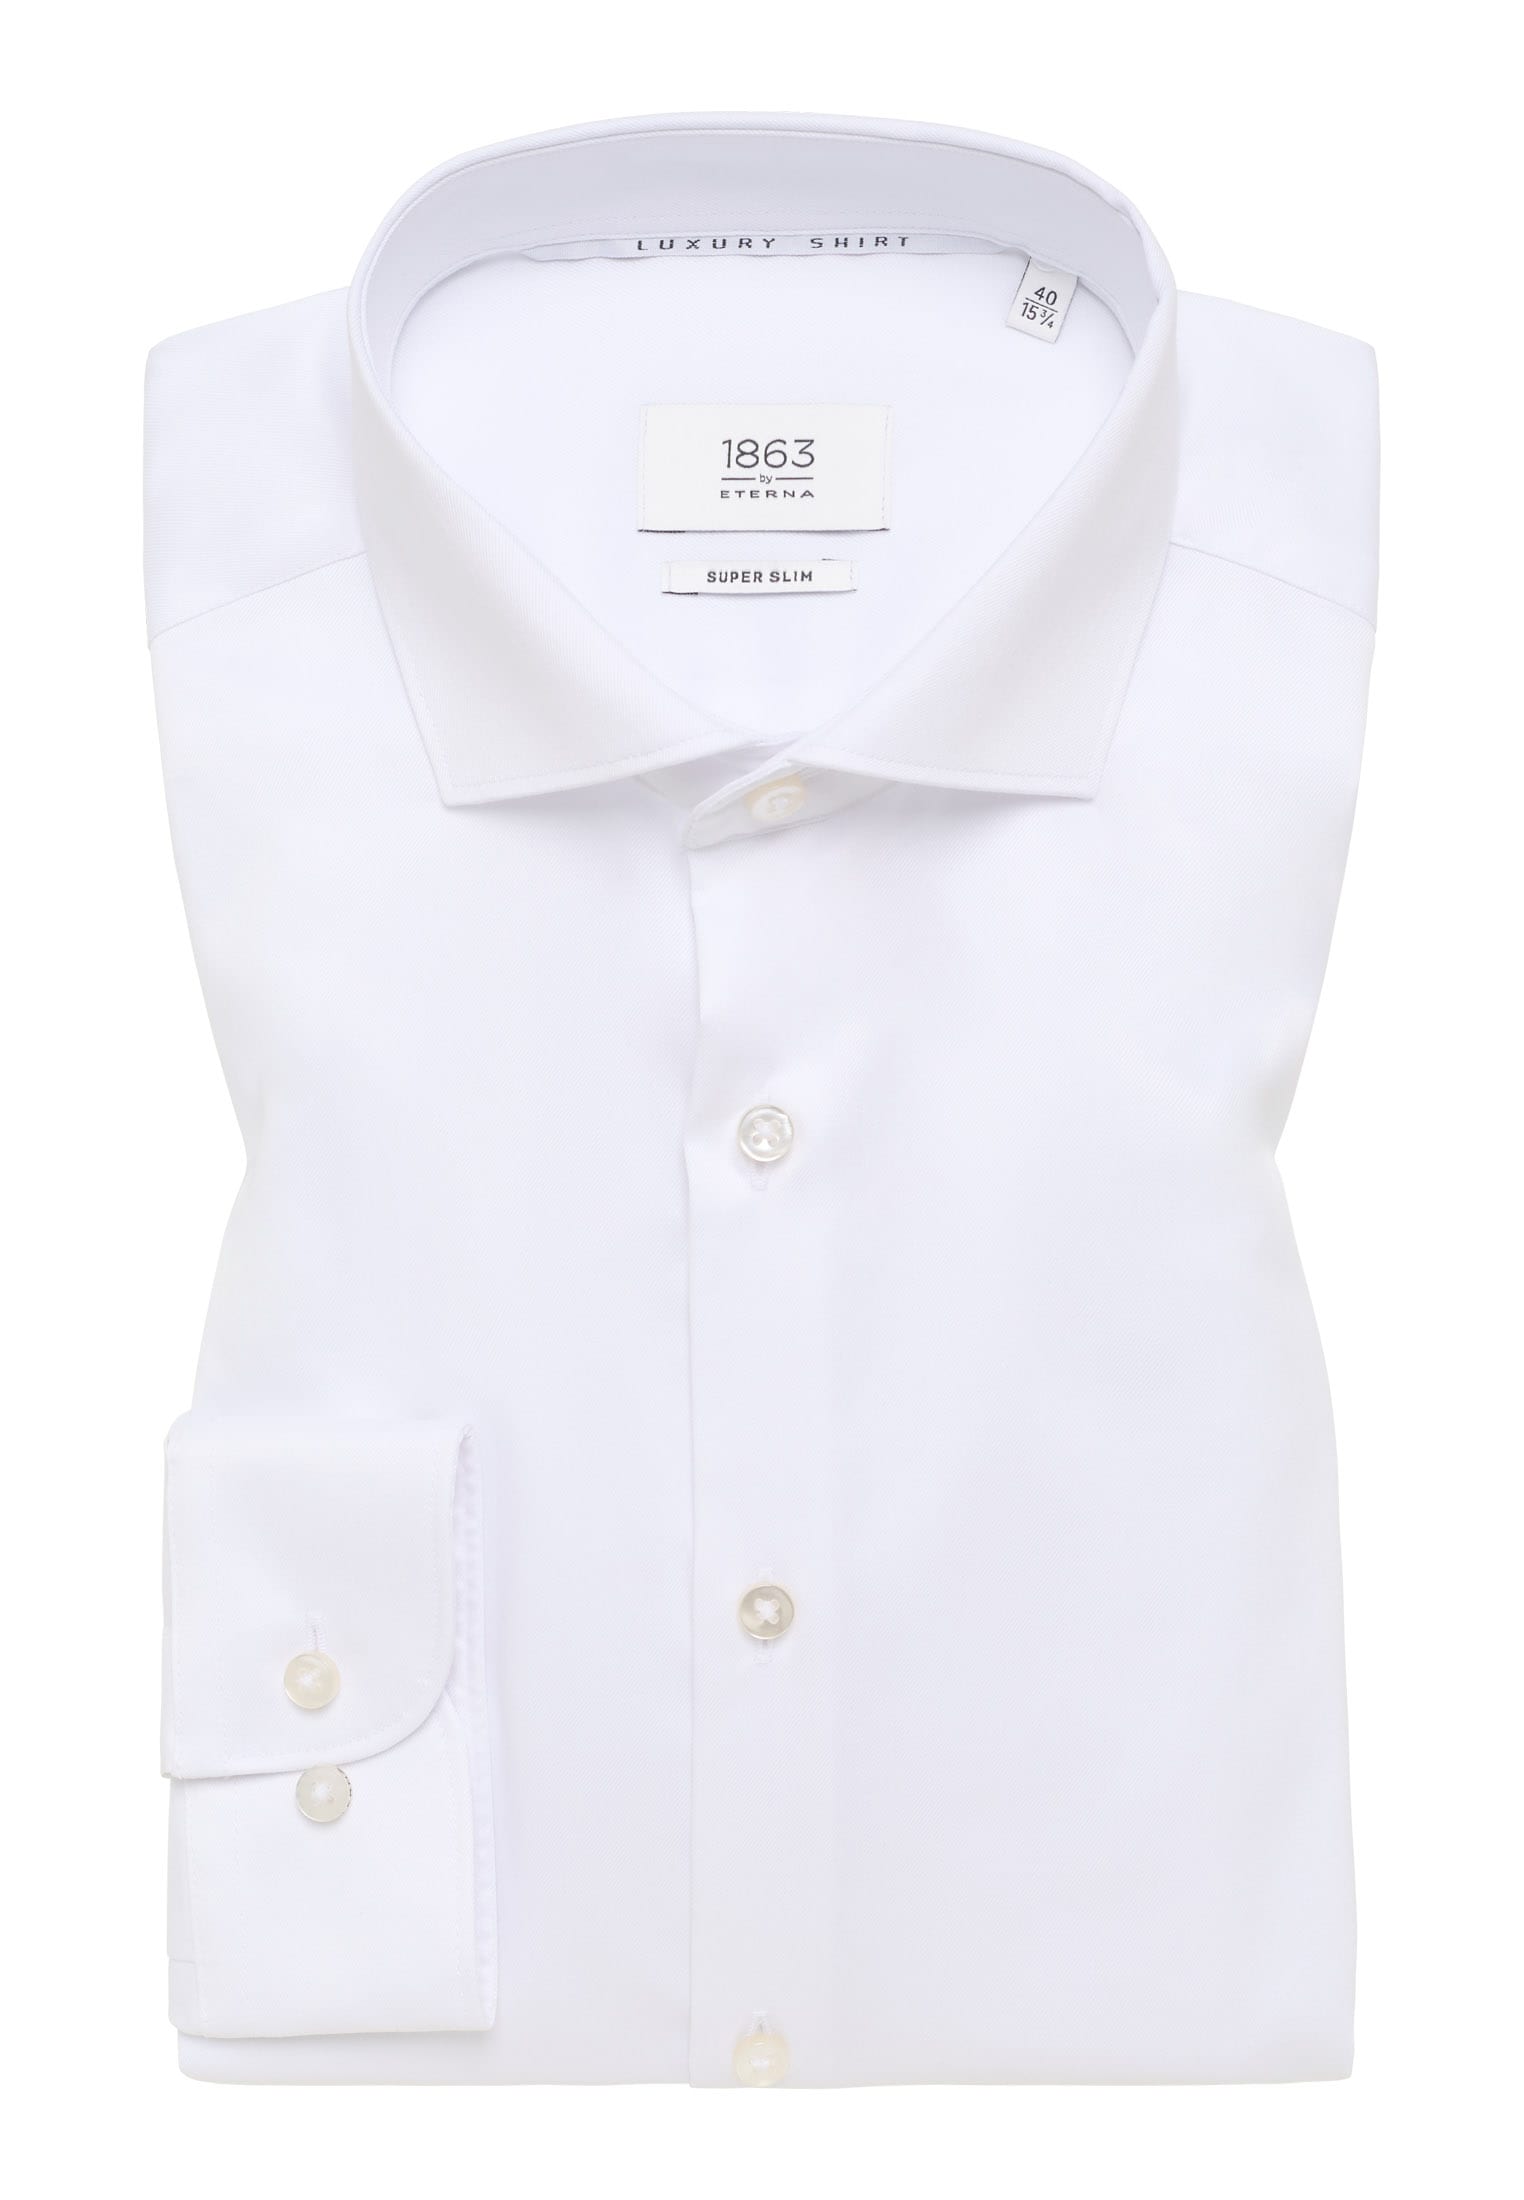 SUPER SLIM Luxury Shirt in weiß unifarben | weiß | Langarm | 42 |  1SH13010-00-01-42-1/1